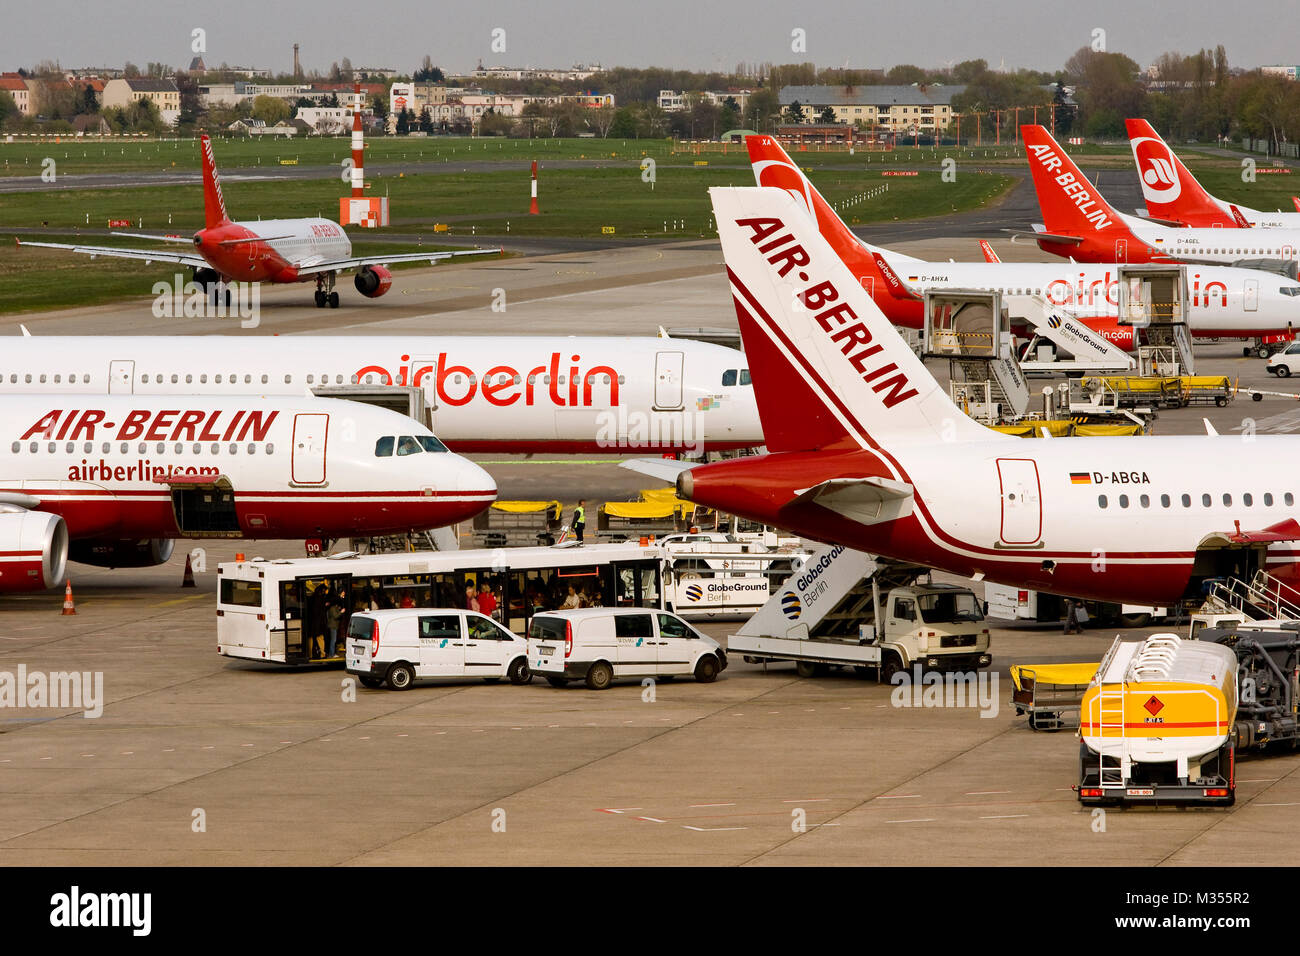 Air Berlin Flugbetrieb auf dem Flughafen TXL Berlino Tegel Foto Stock